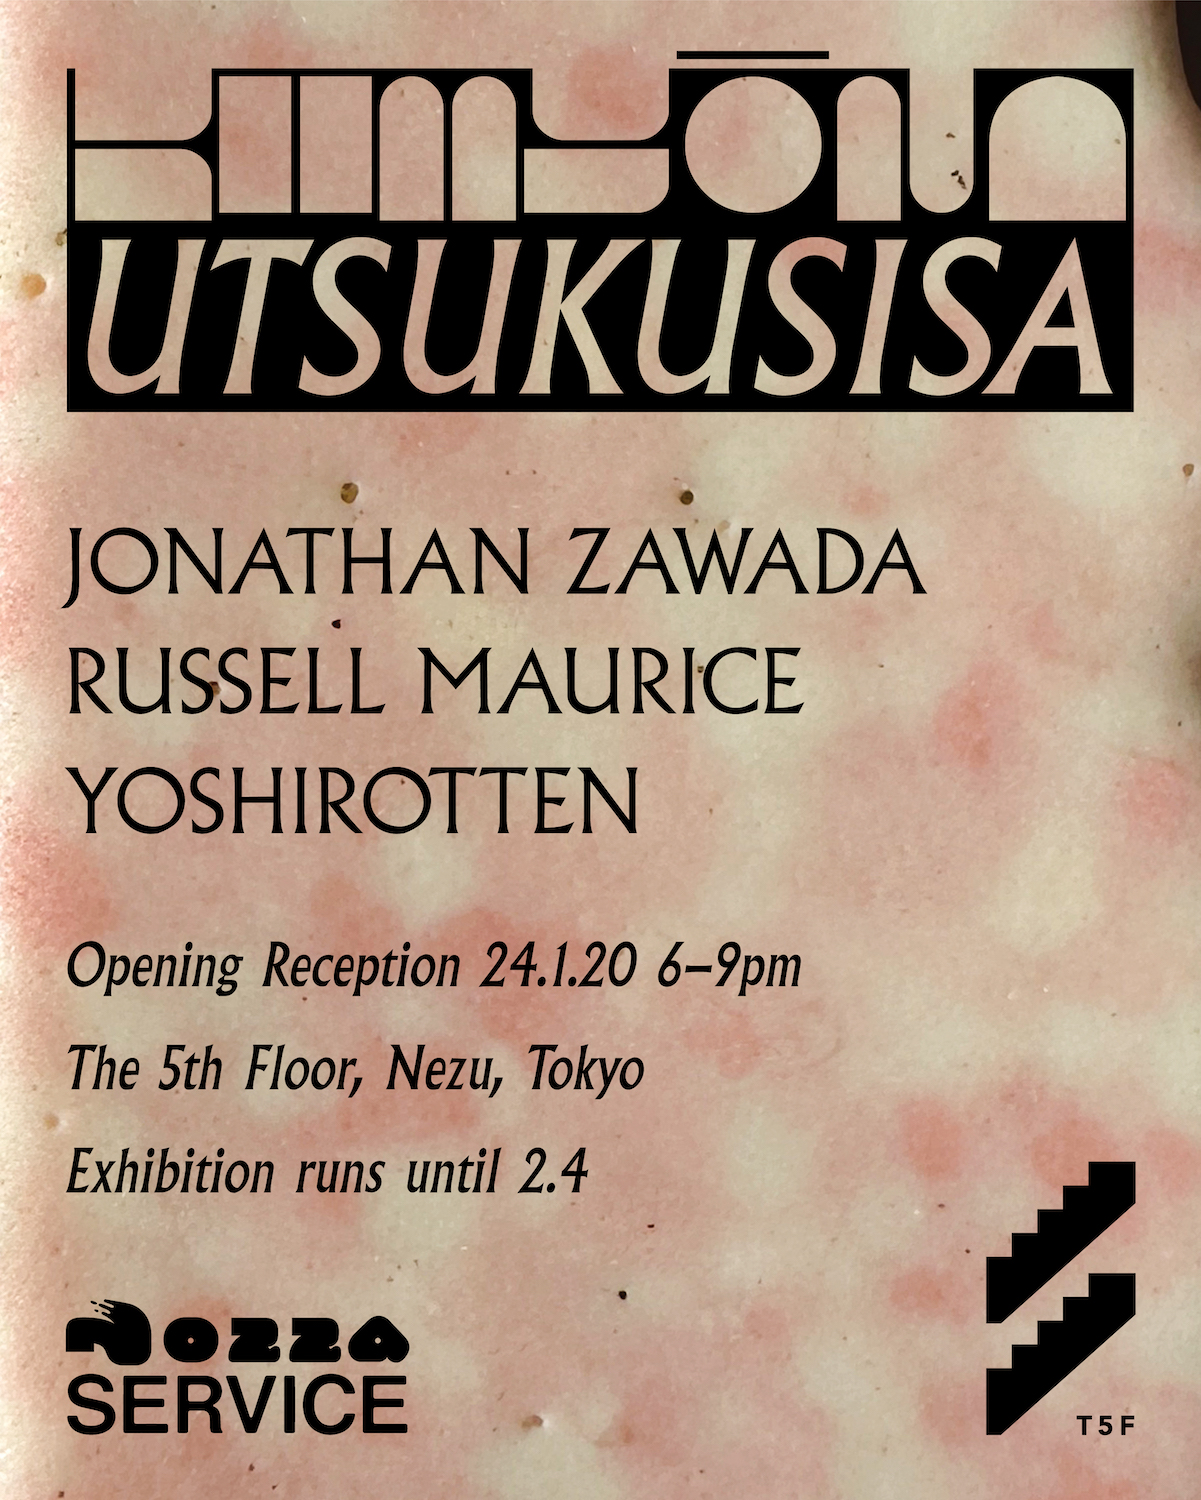 The 5th Floor」と「Nozza Service」による企画展「KIMYŌNA UTSUKUSISA 